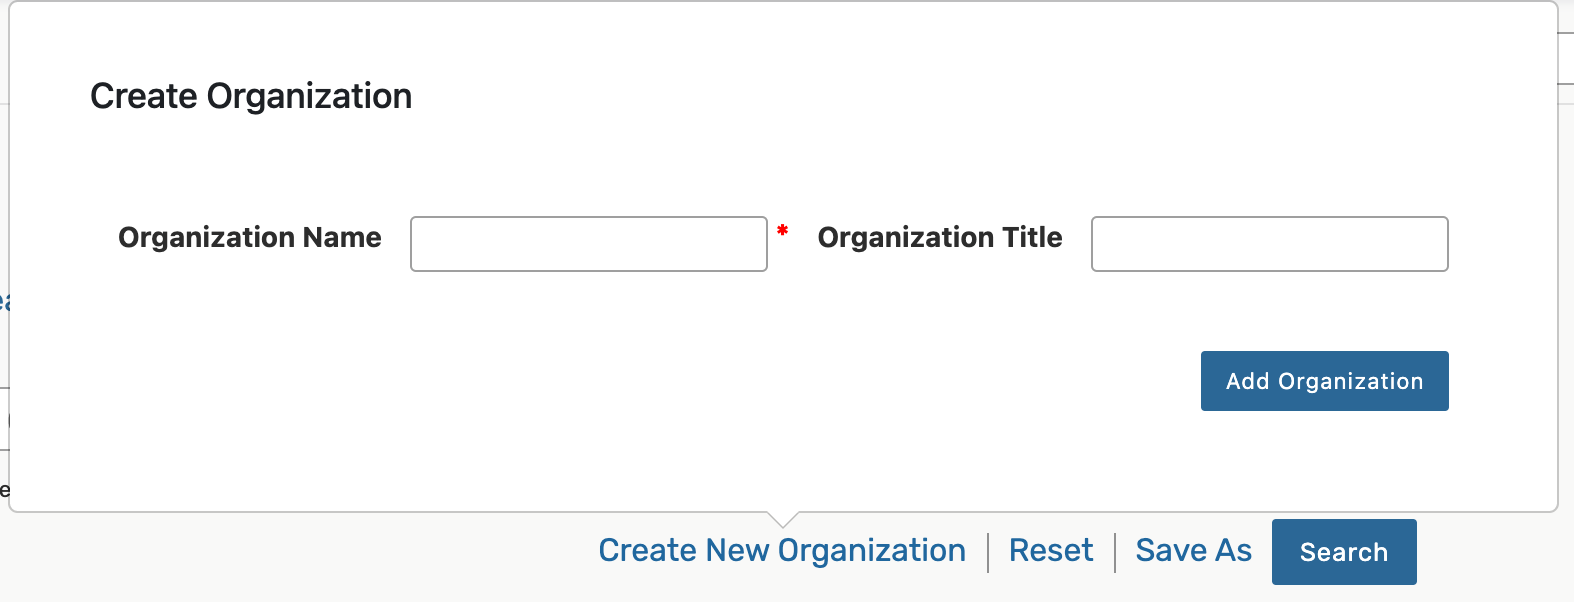 Create New Organization form